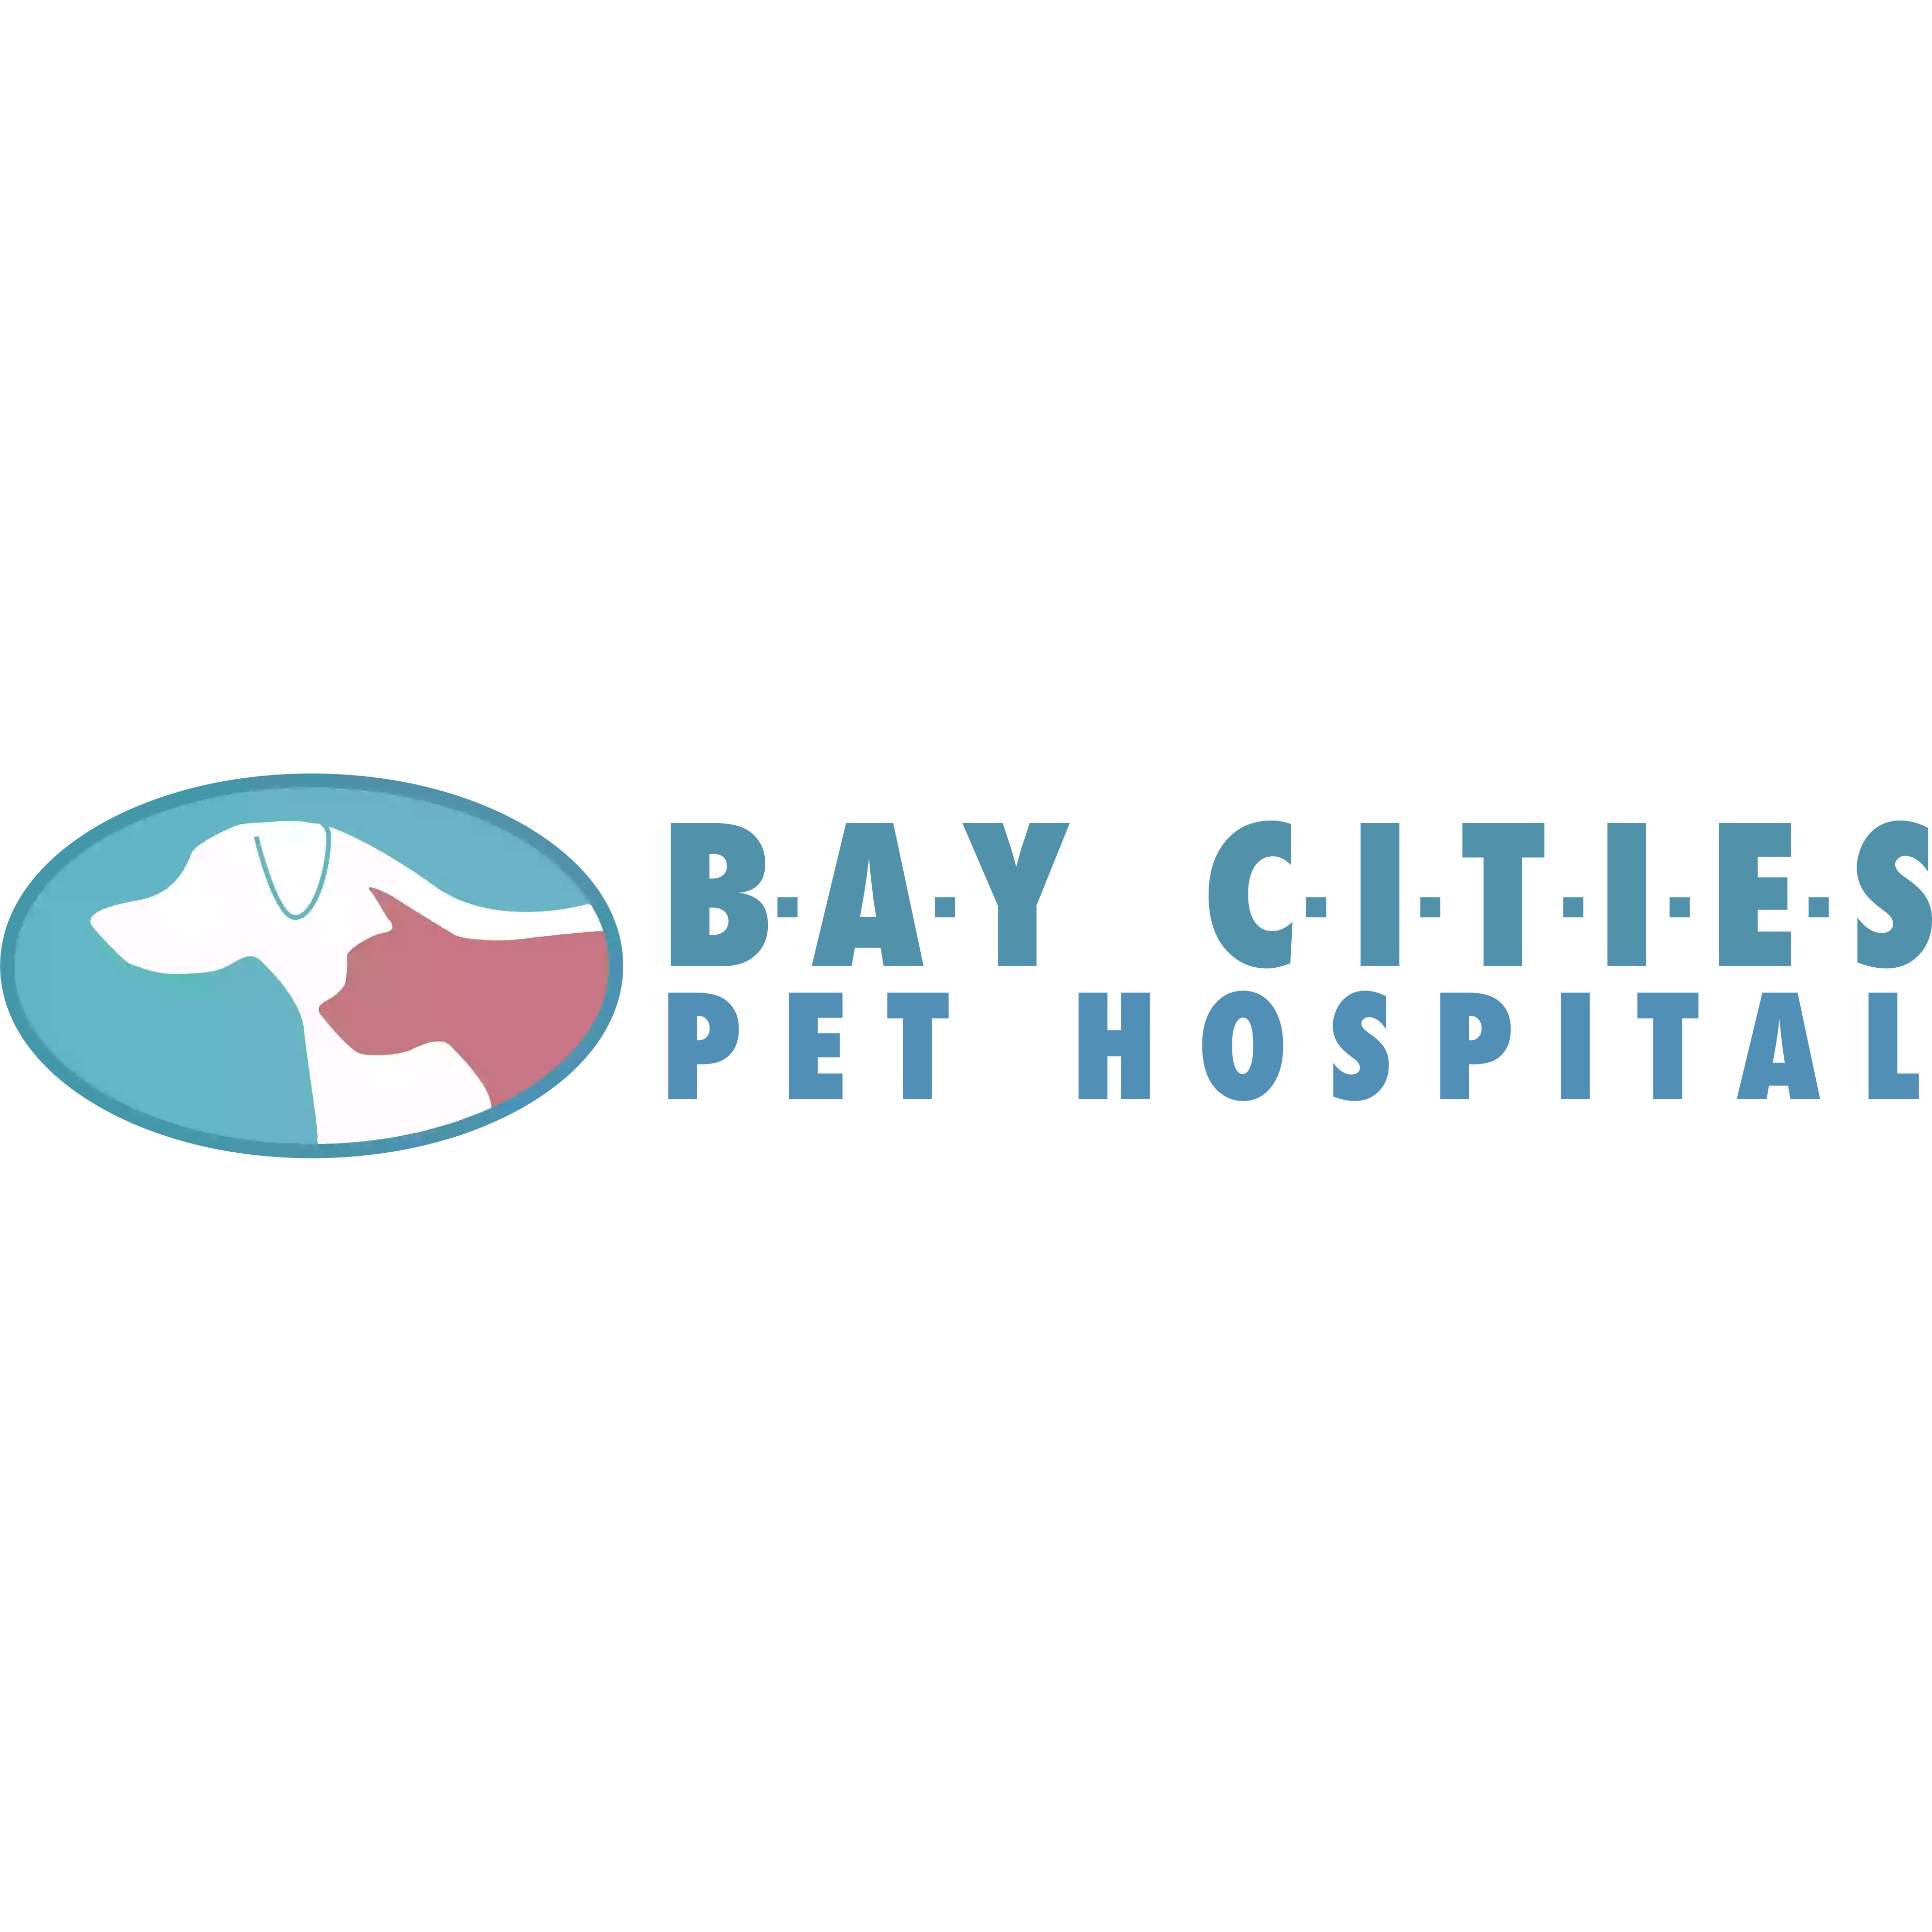 Bay Cities Pet Hospital